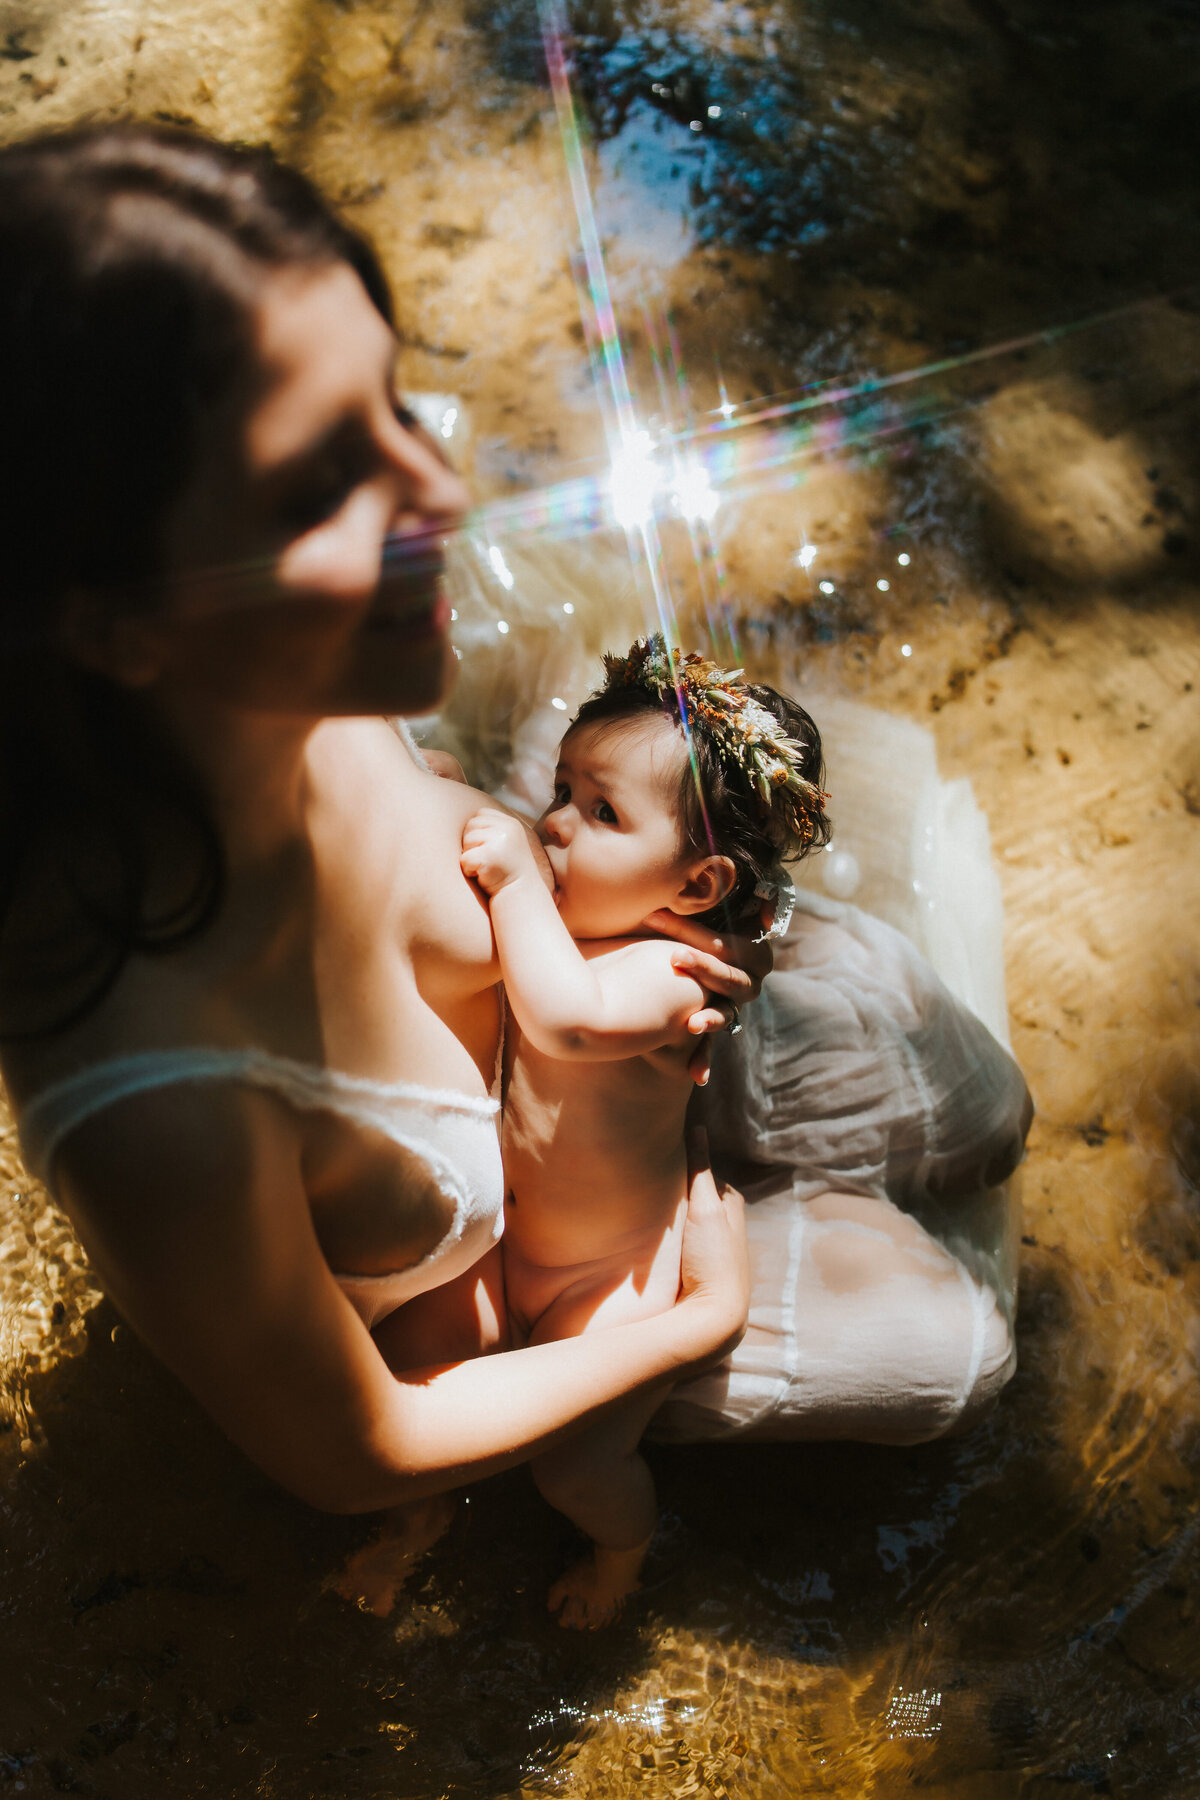 stunning artistic creek portraits of a women sitting in a creek breastfeeding her baby